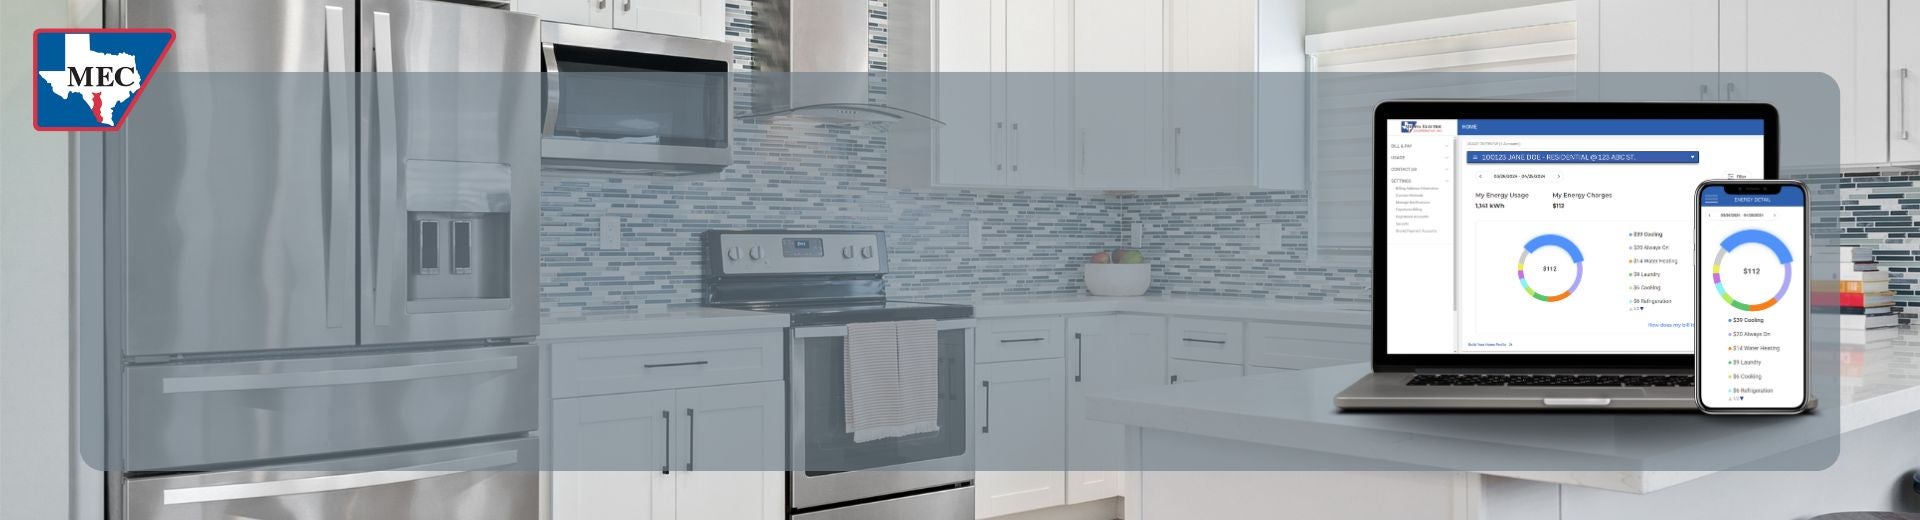 Slideshow Image - Kitchen with appliances